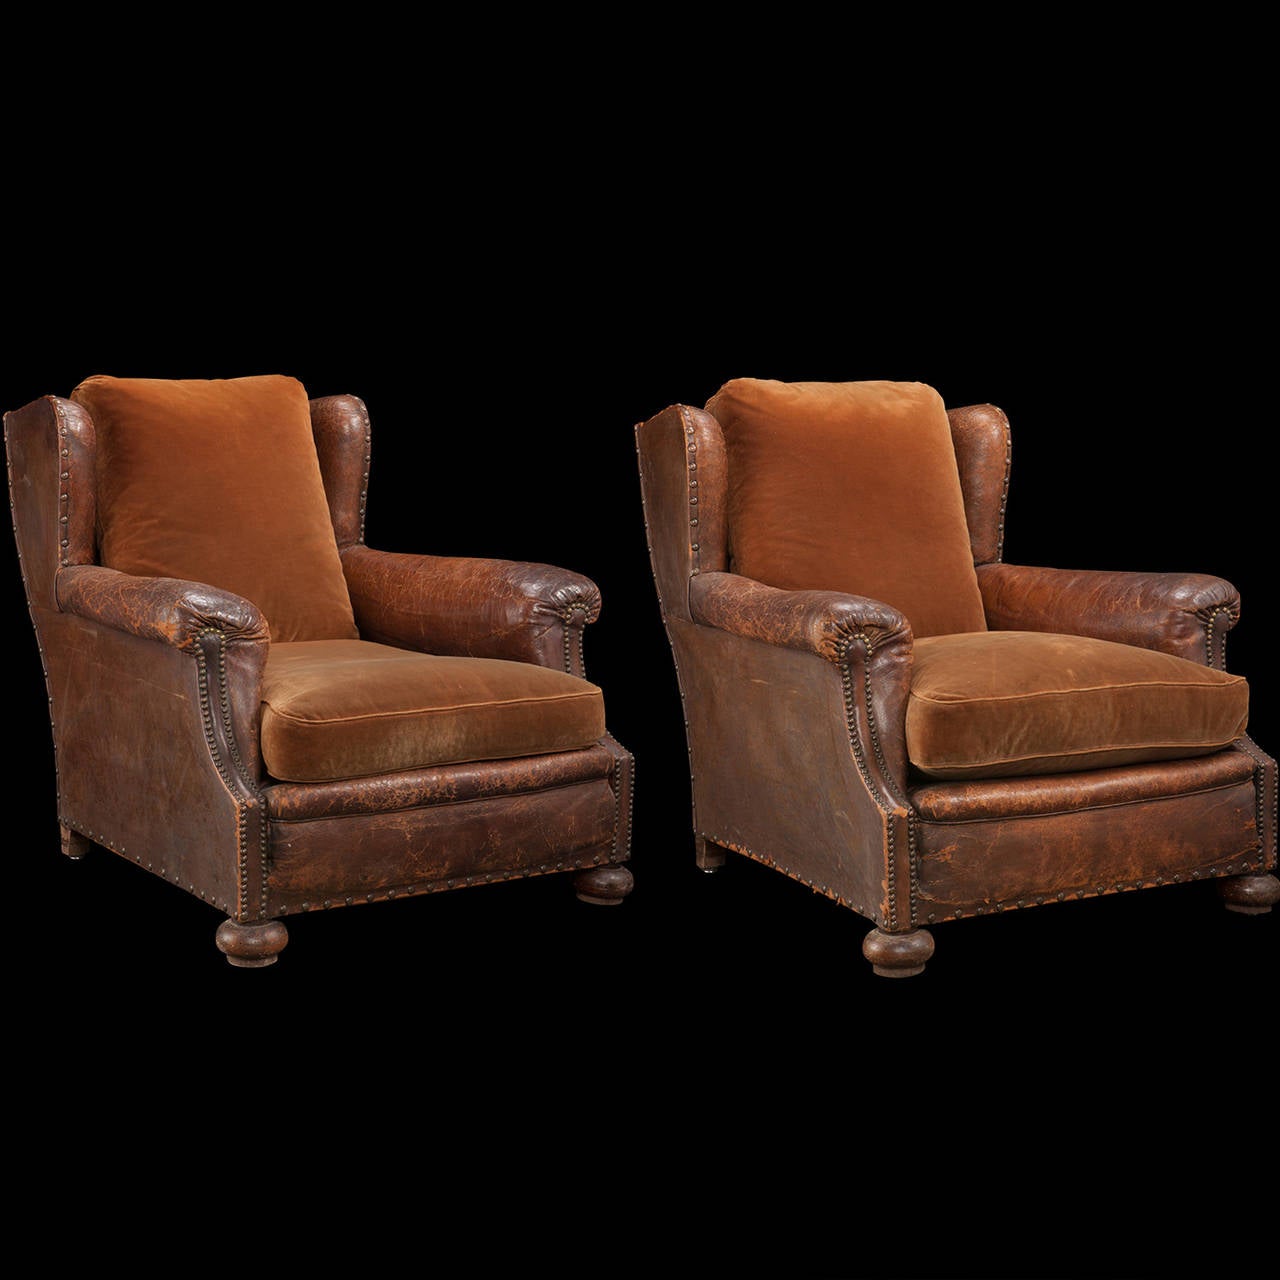 Leather upholstered body, fitted with brass nails on oak bun feet. Upholstered in velvet.